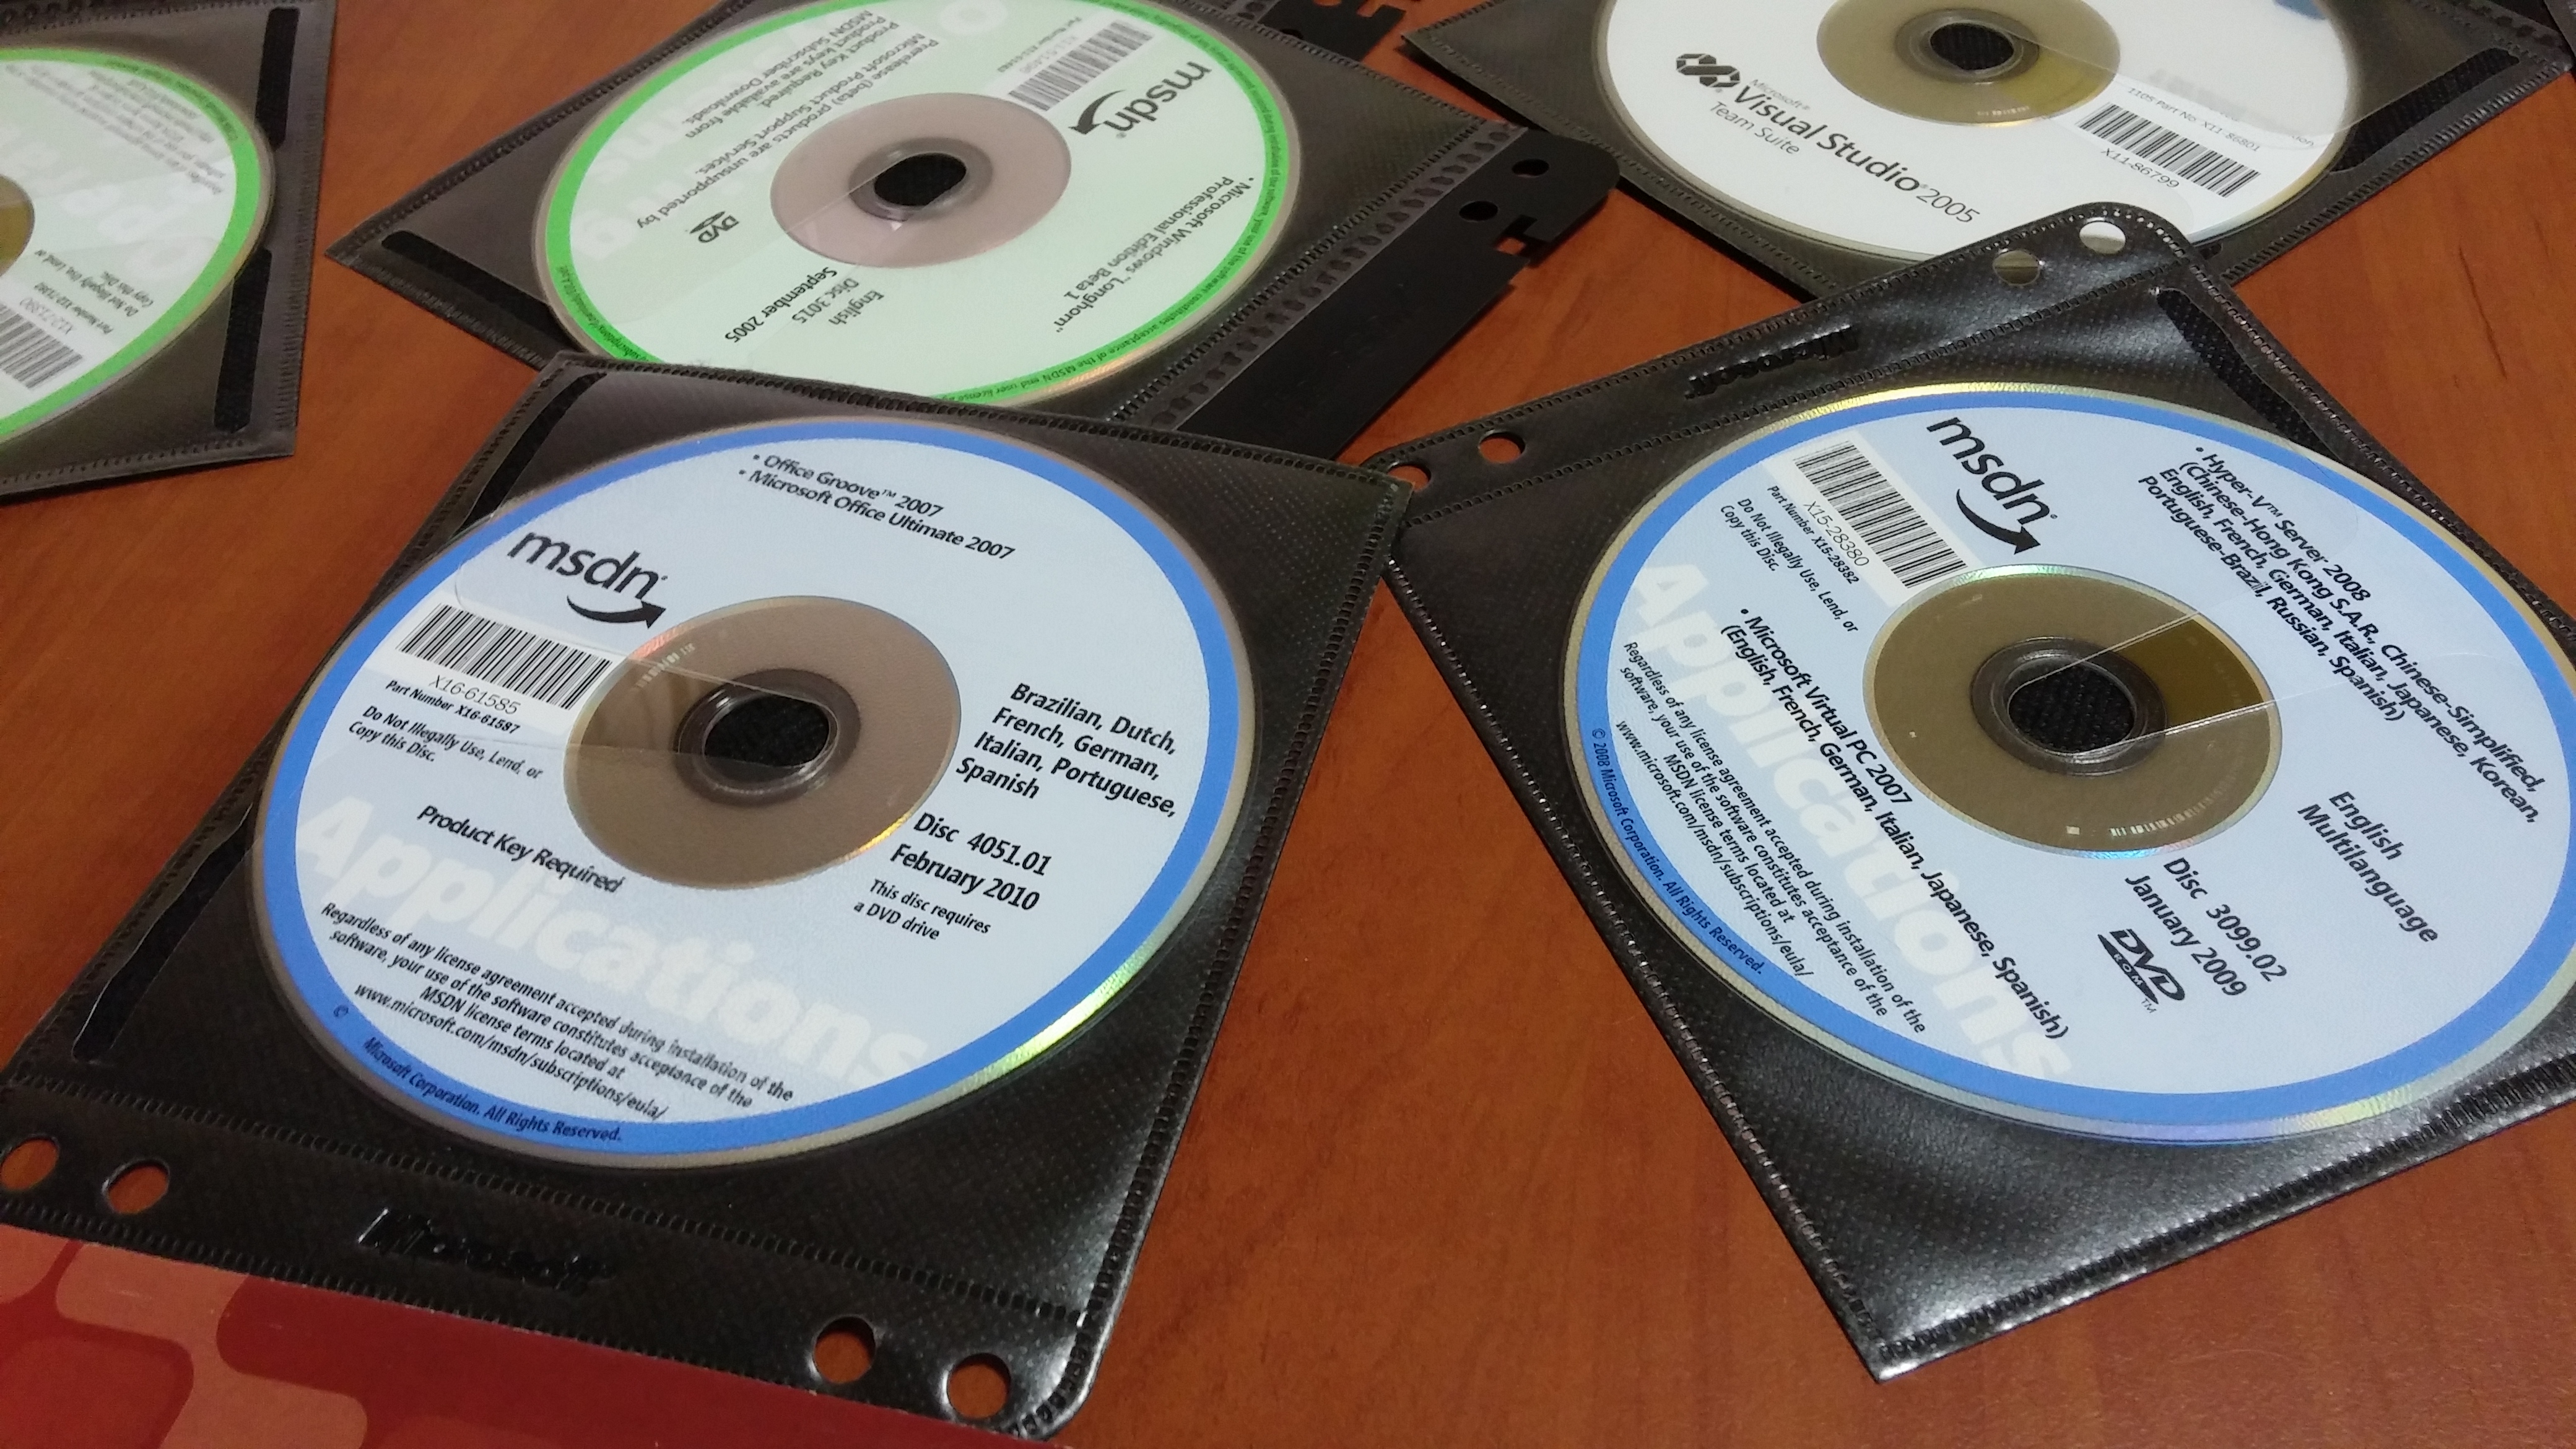 Some random MSDN disks